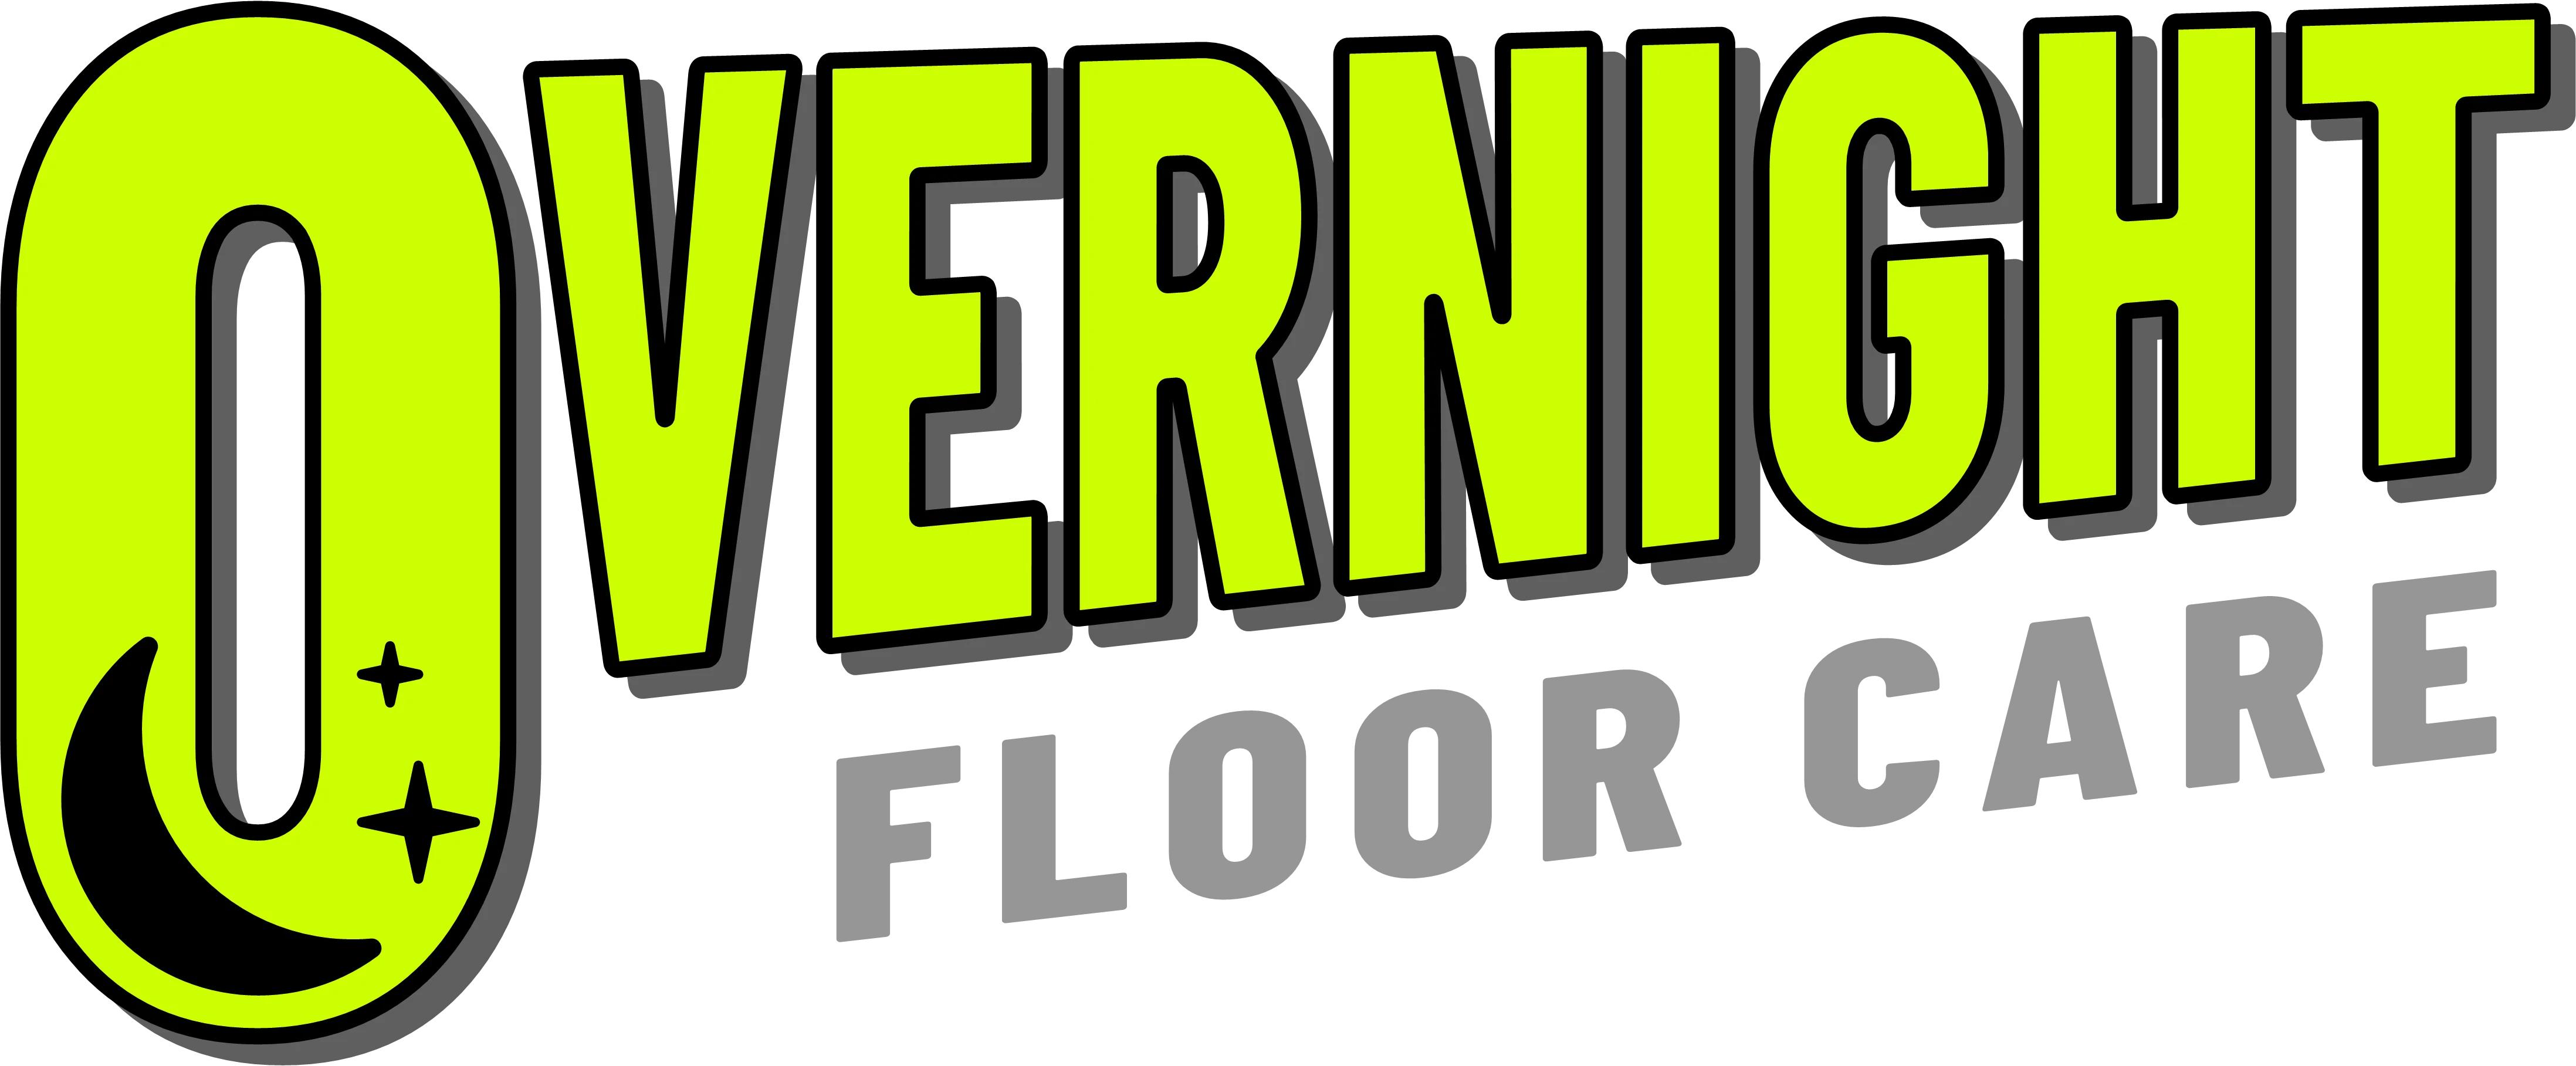 Overnight Floor Care